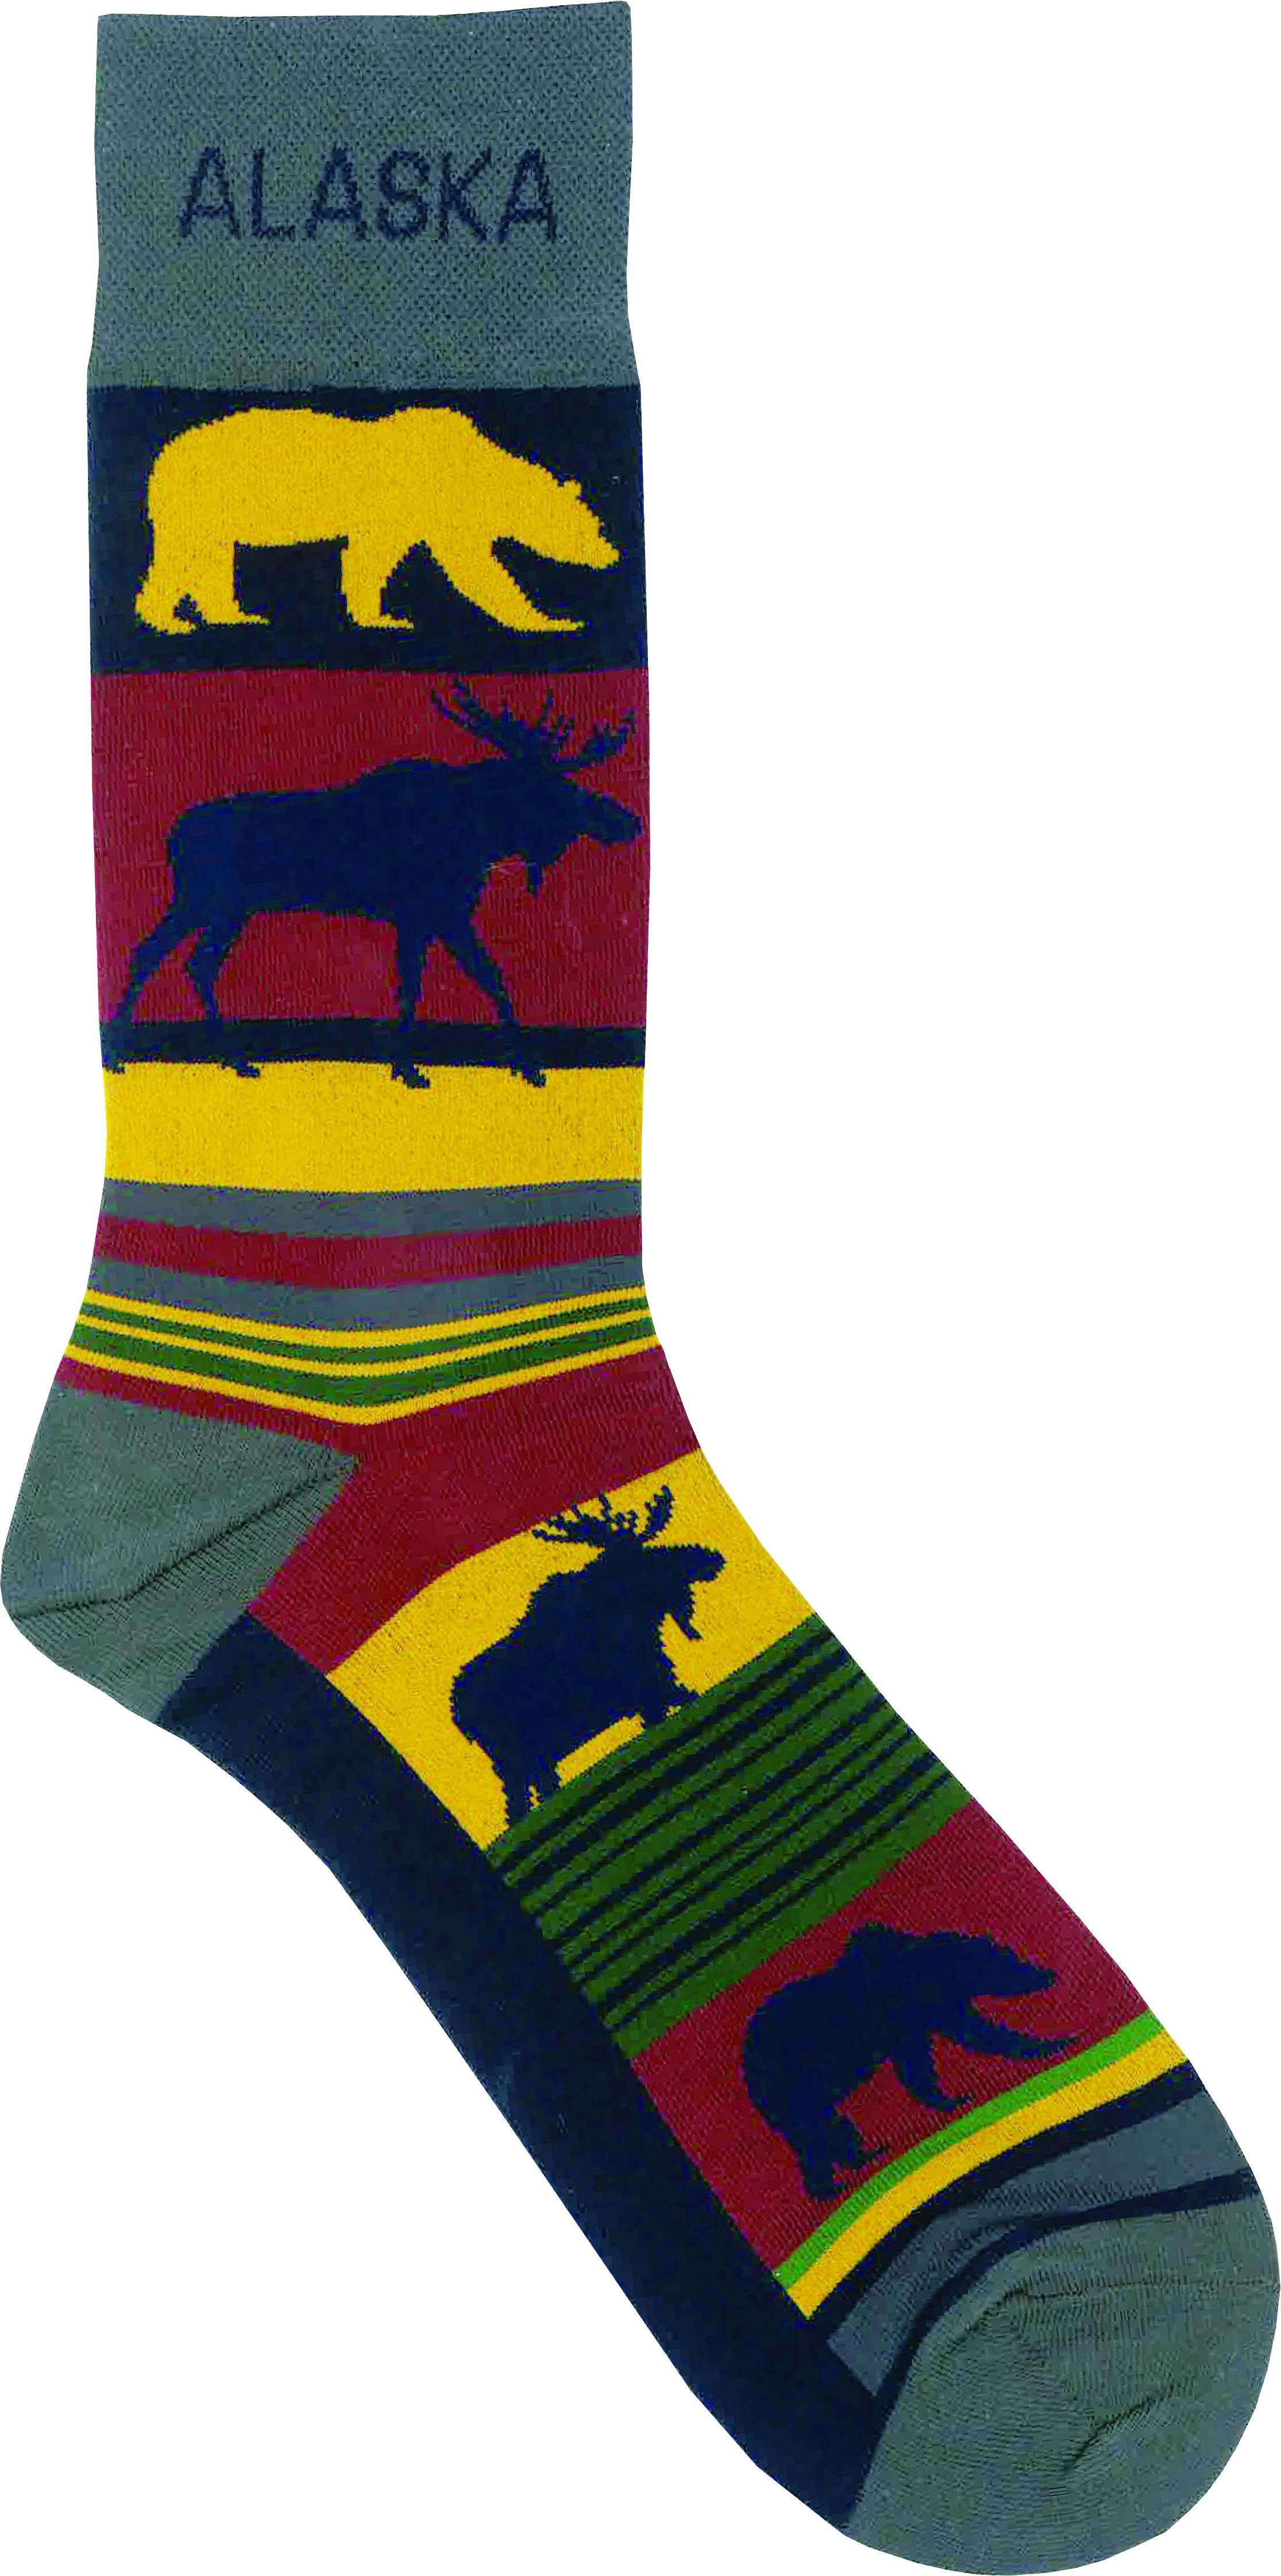  Socks - Bear + Moose Strips